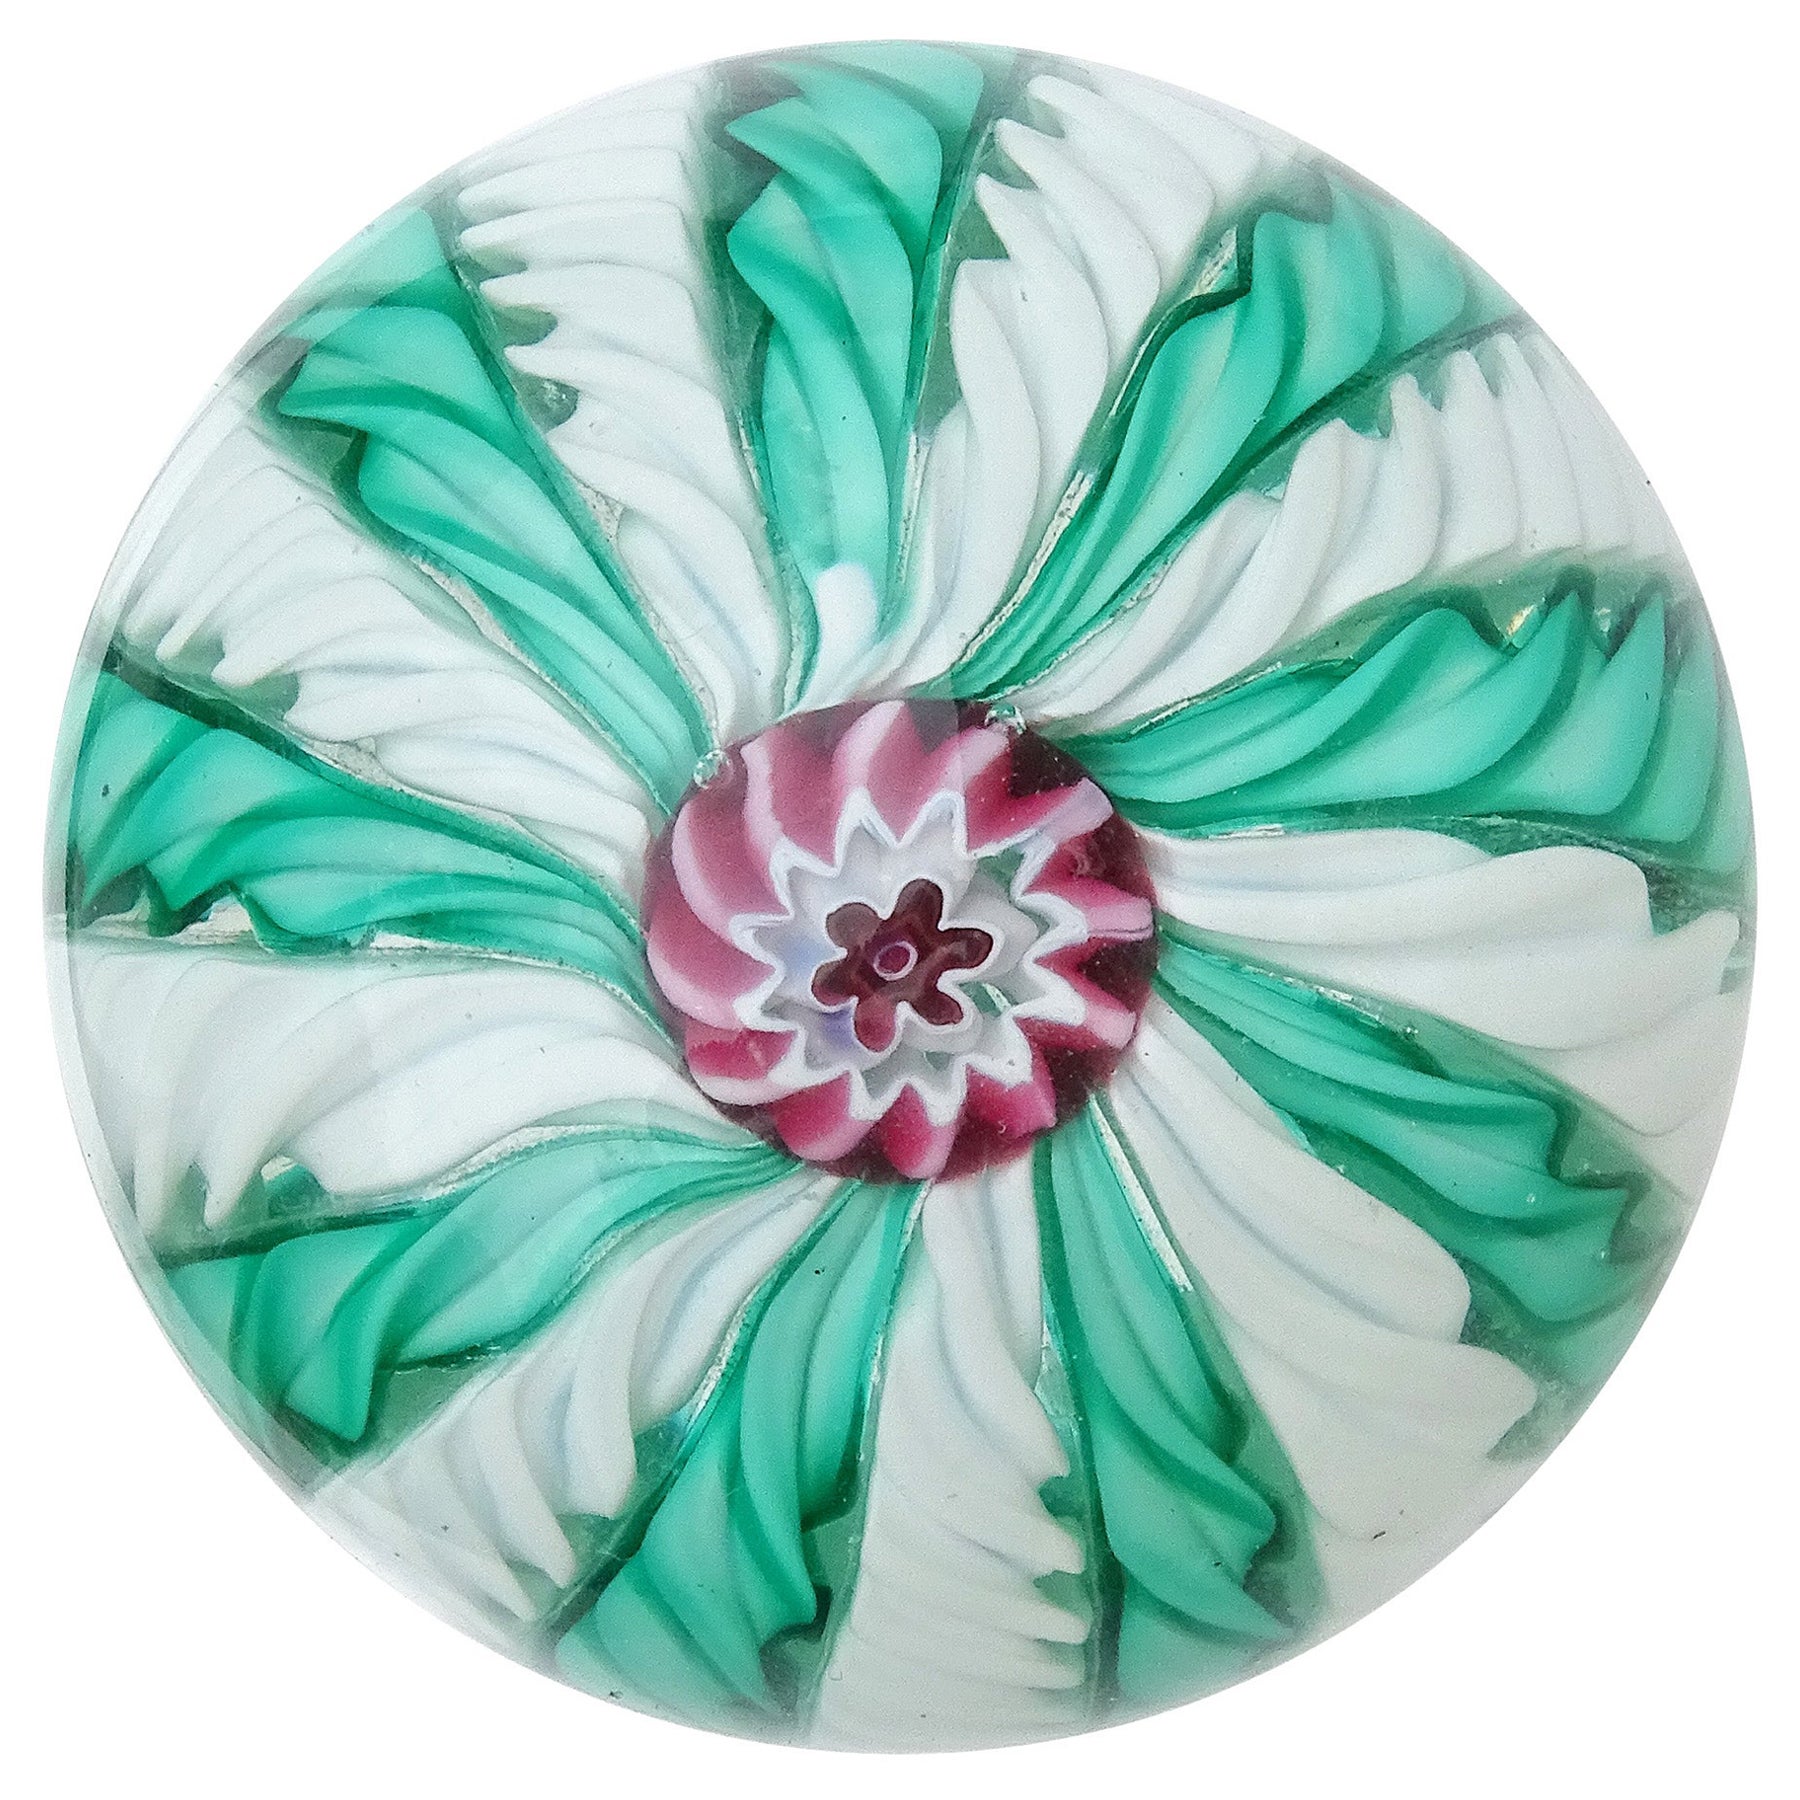 Fratelli Toso Murano Green White Italian Art Glass Crown Paperweight